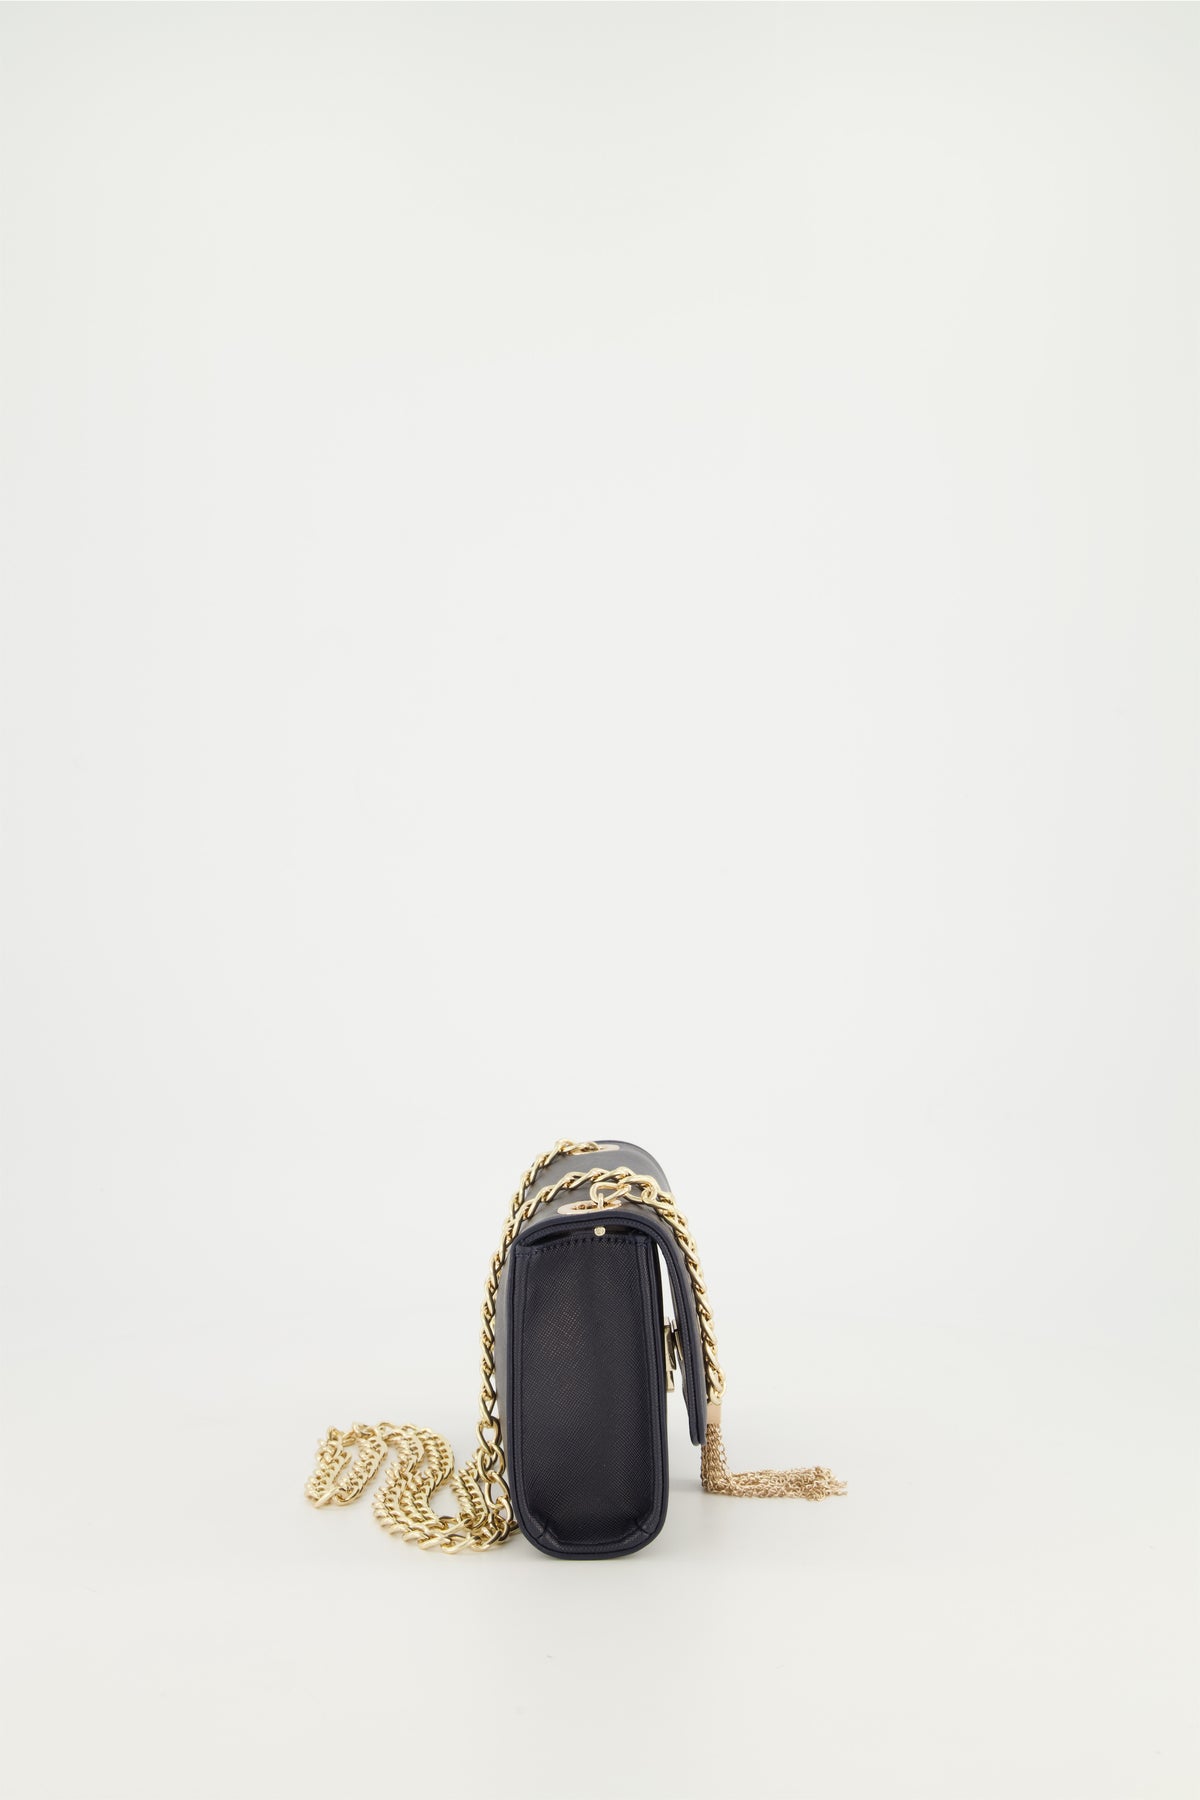 Valentino Bags Black/Gold Divina Crossbody Bag